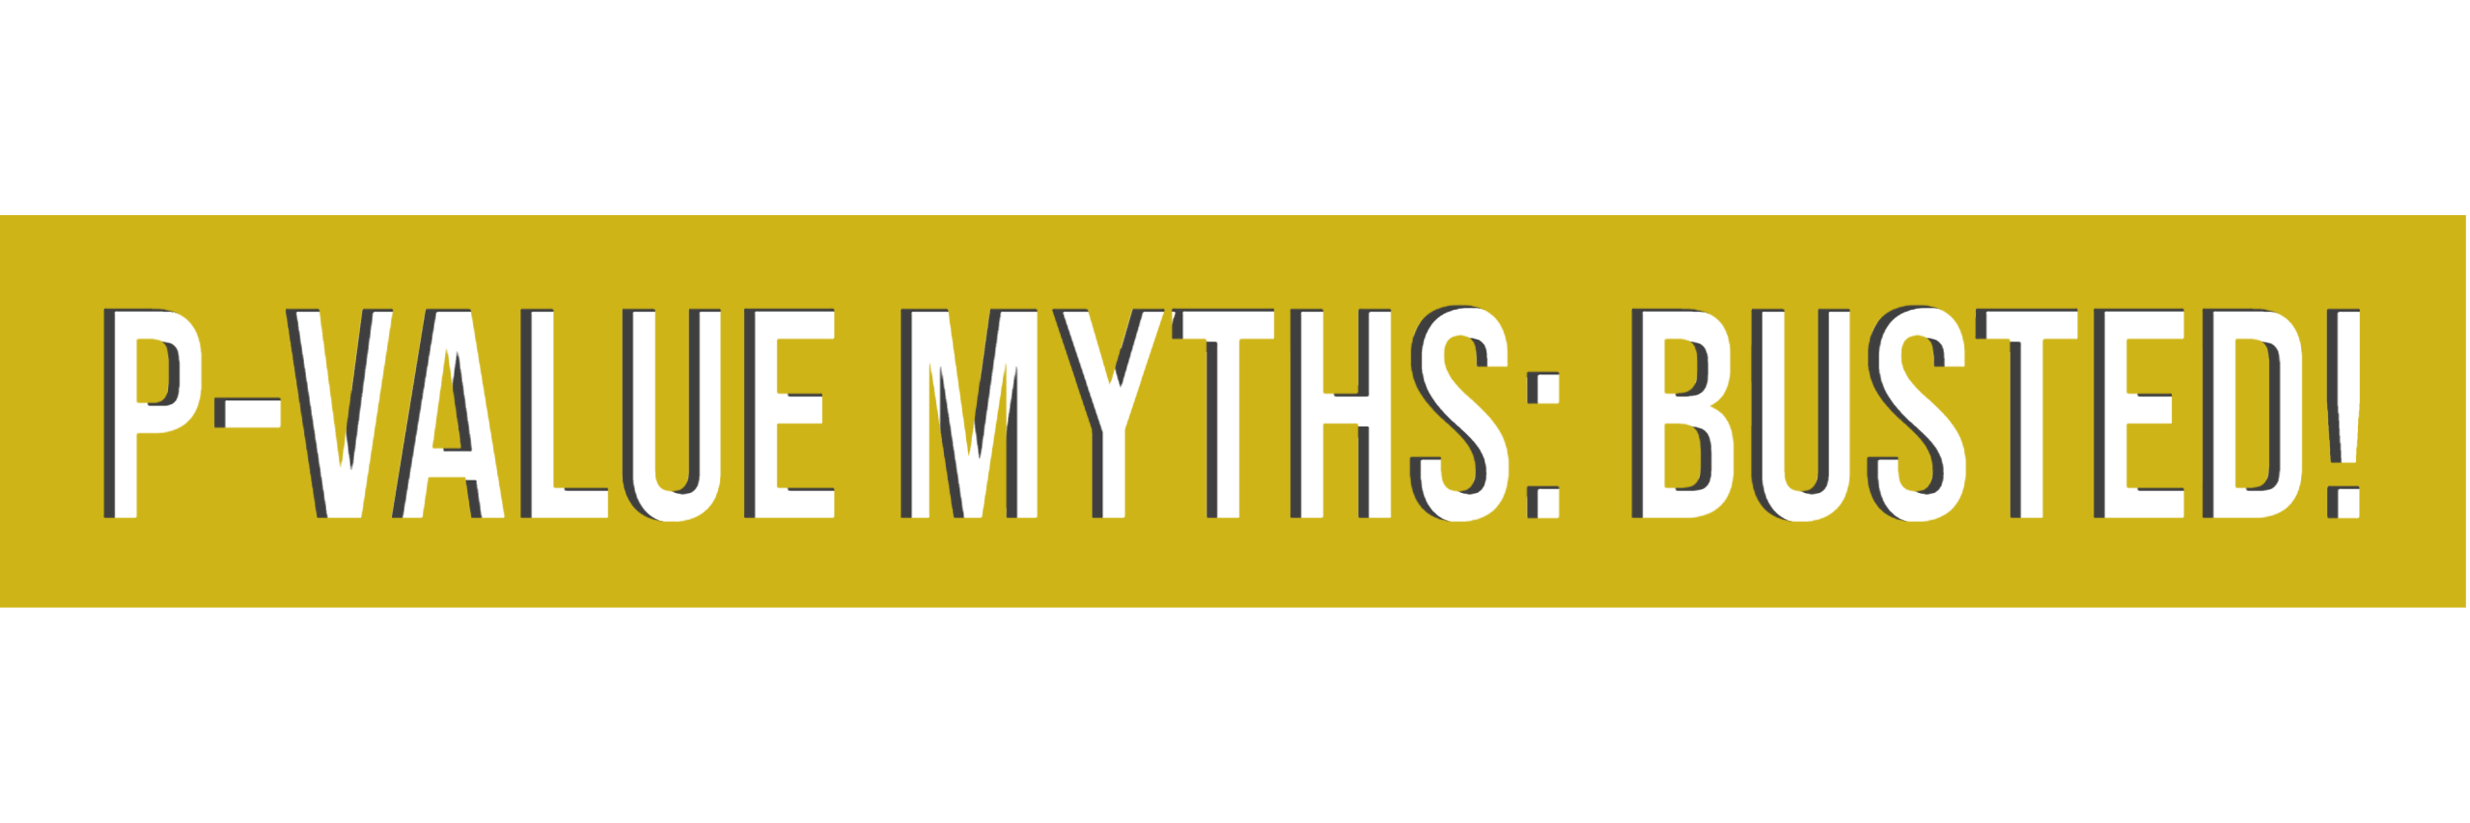 p value myths busted